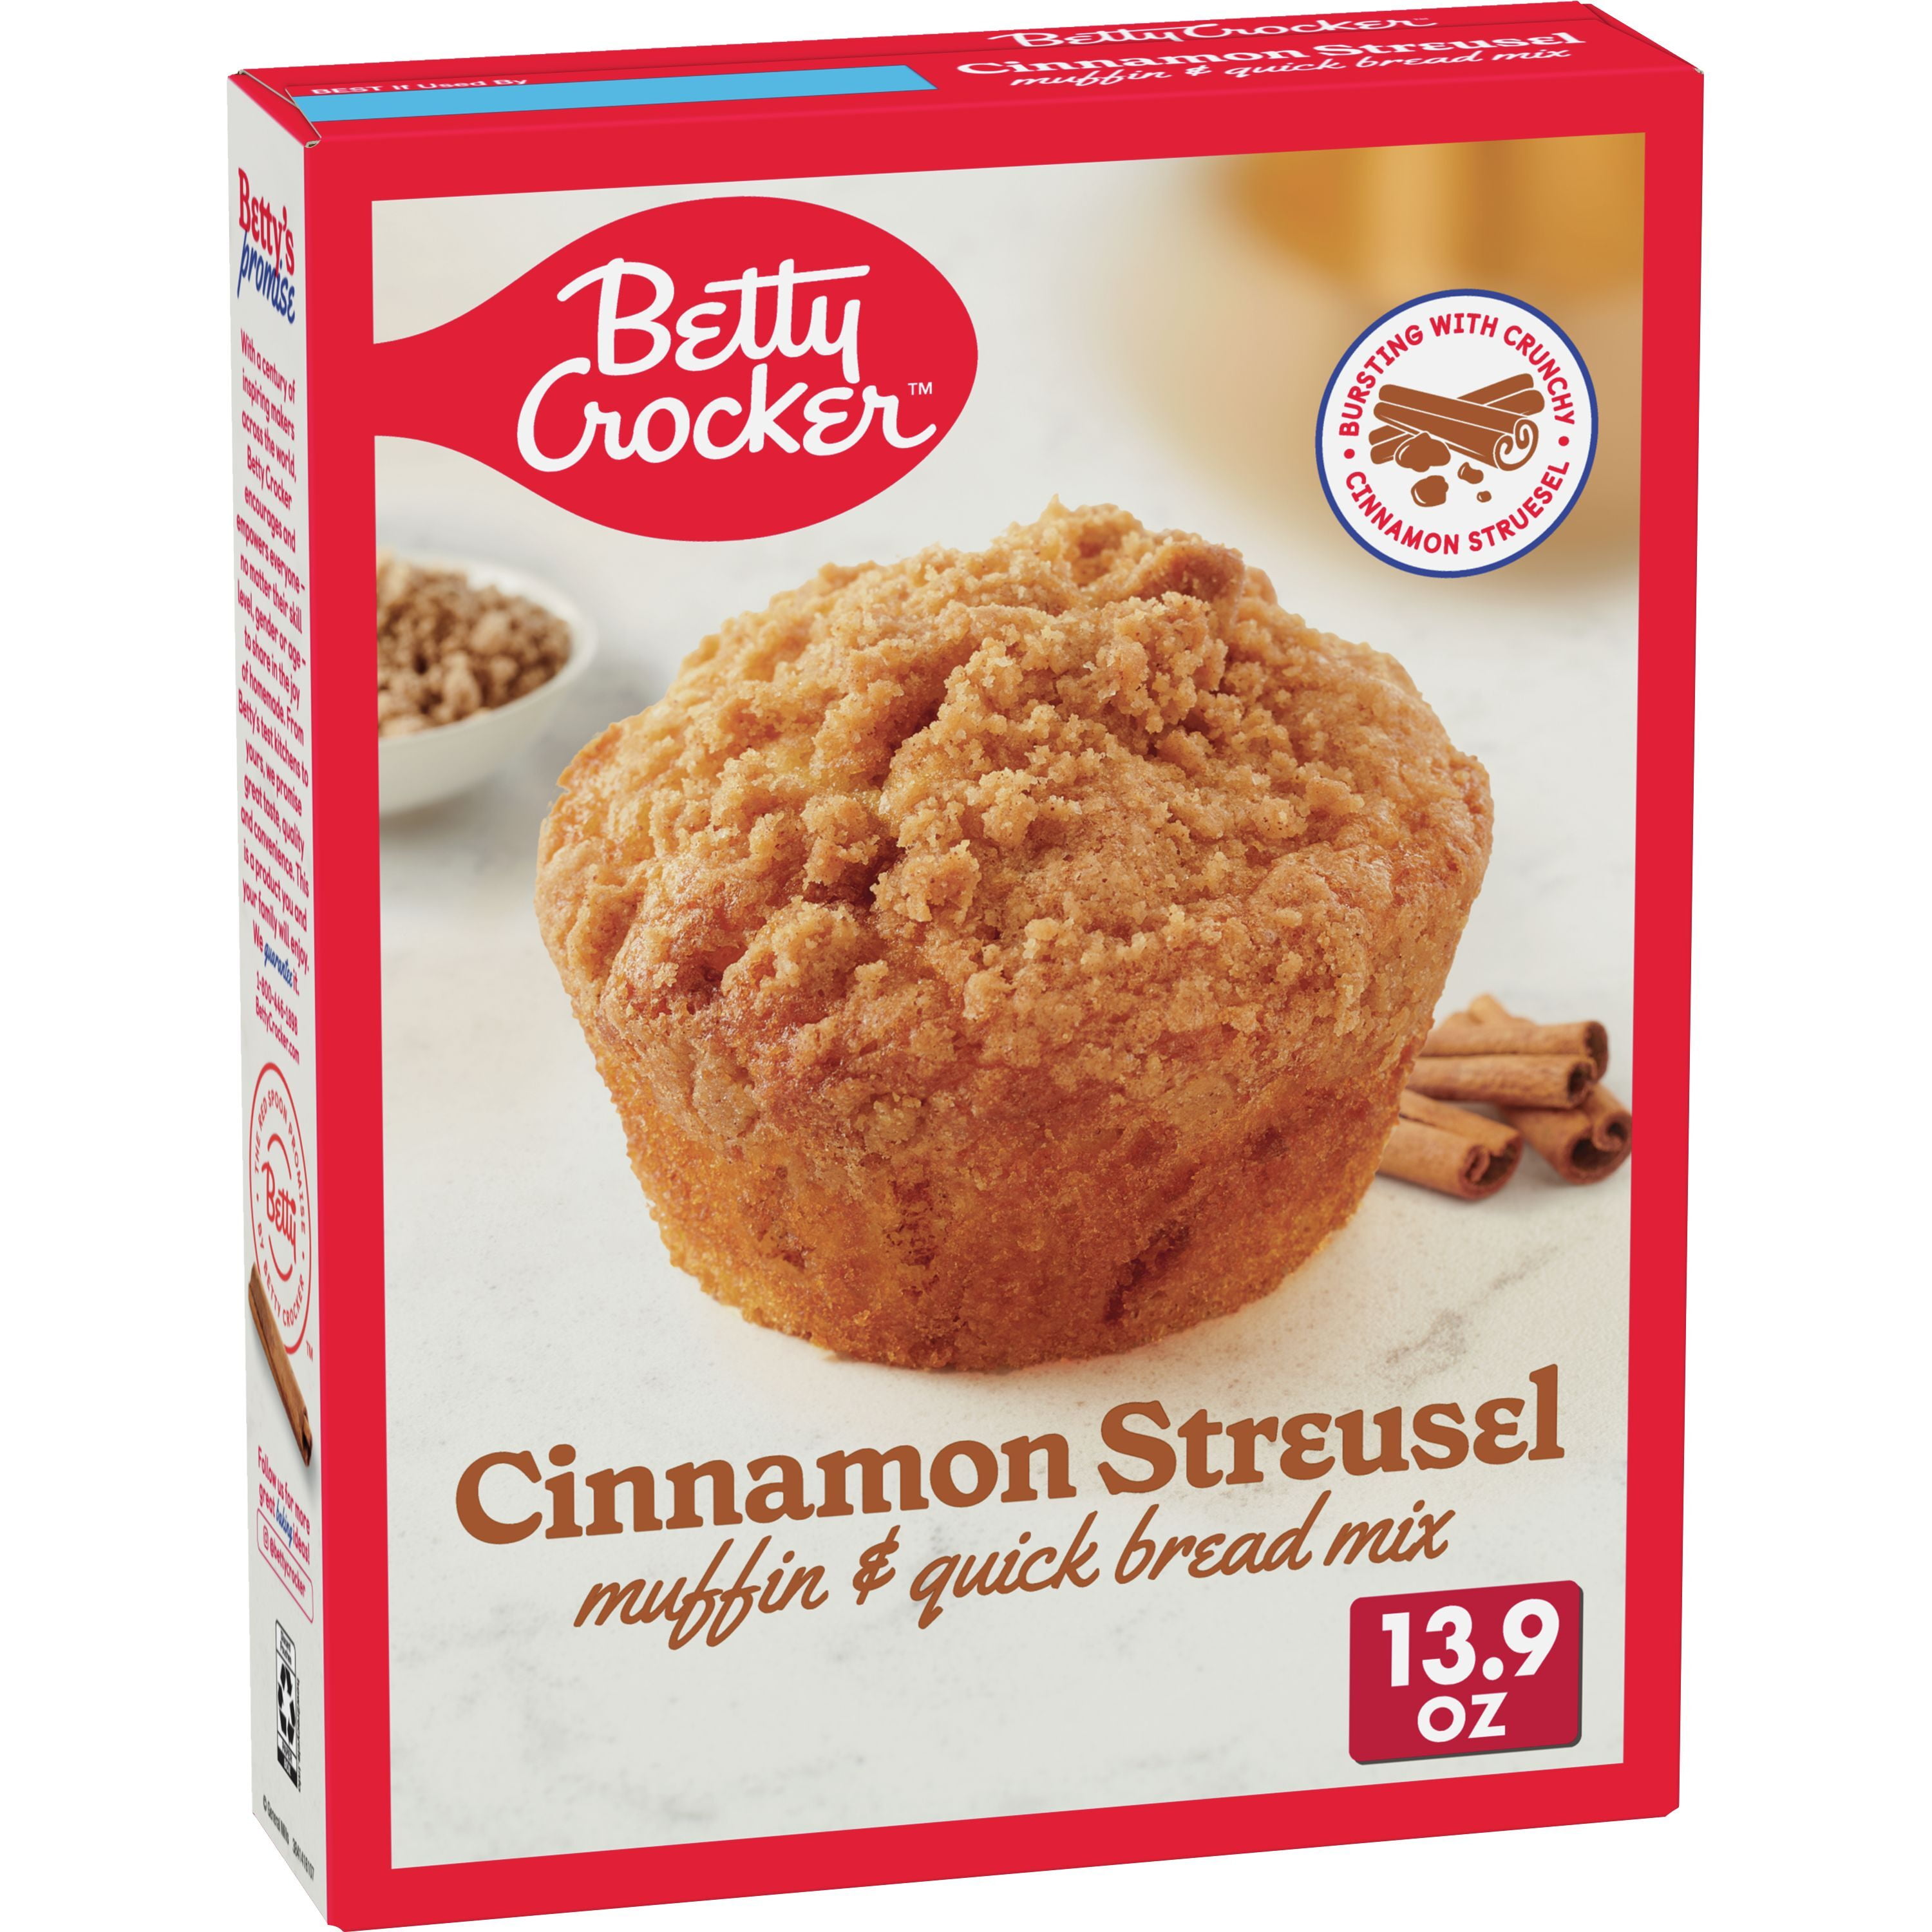 Betty Crocker Cinnamon Streusel Muffin and Quick Bread Mix, 13.9 oz